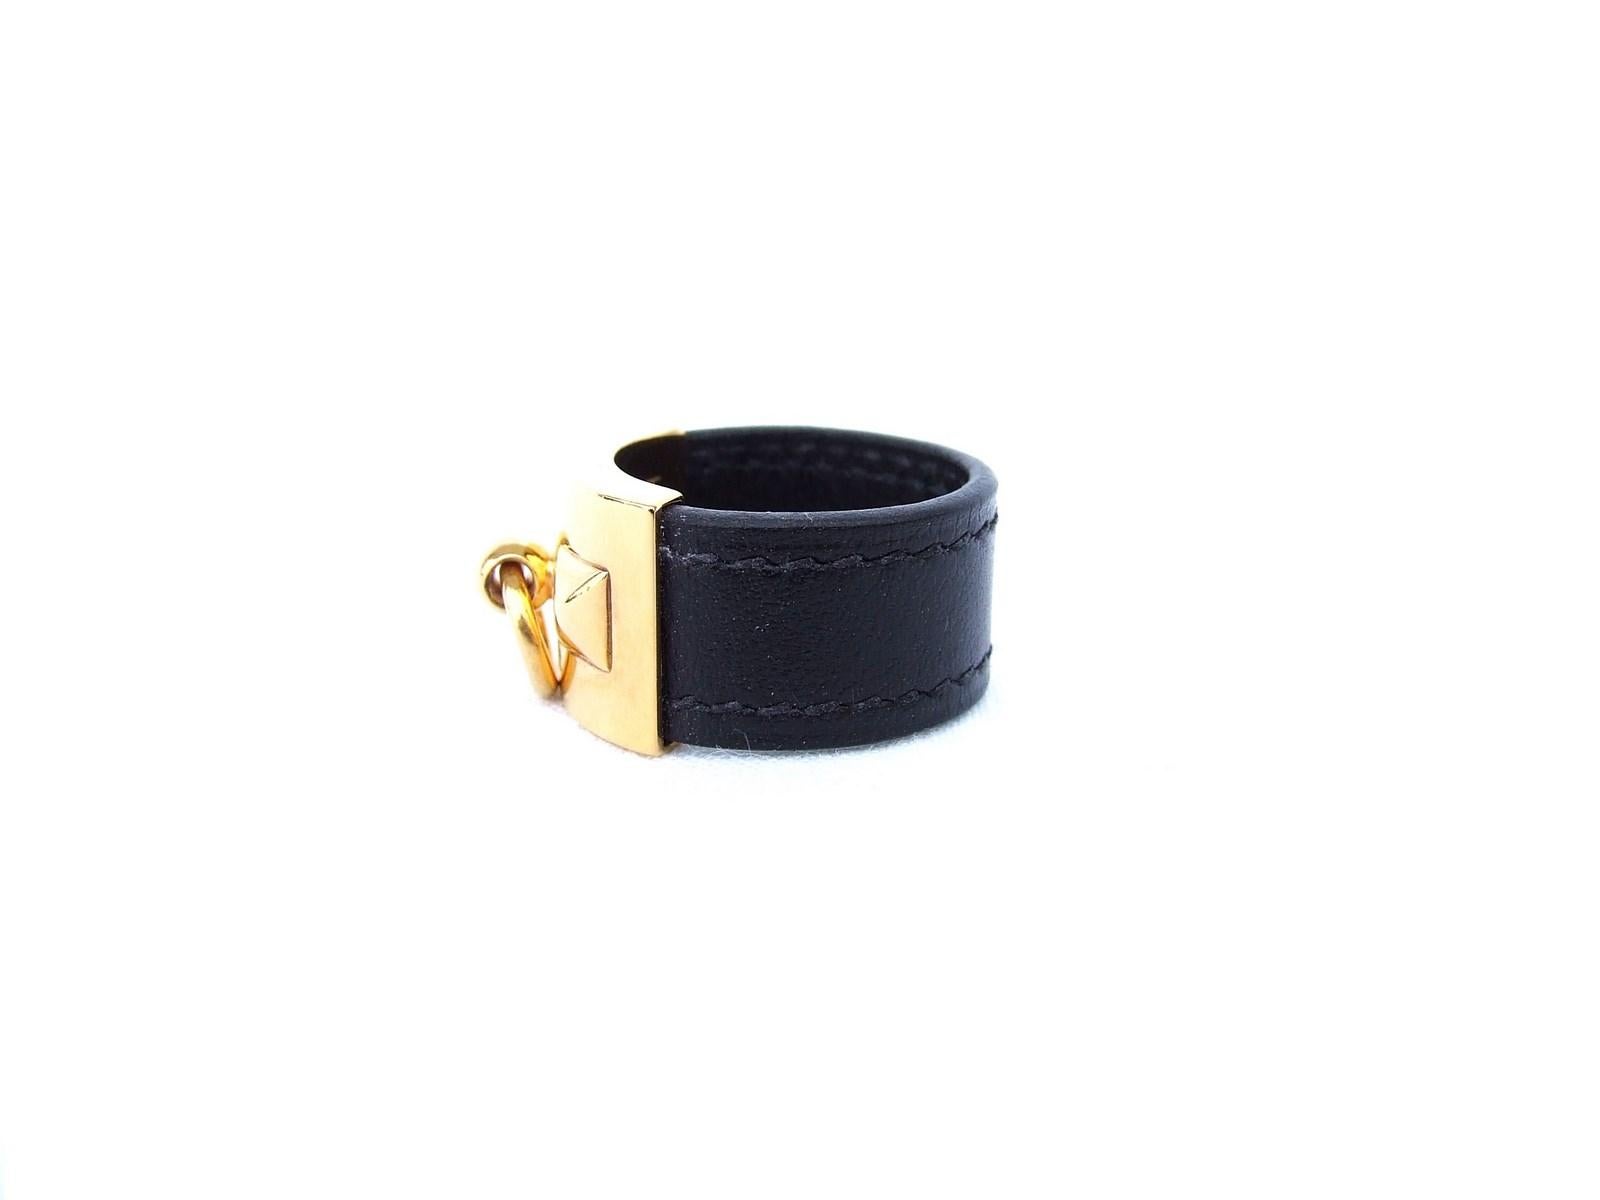 Hermès Collier de Chien CDC Medor Ring Black Leather Ghw Size L RARE For Sale 10